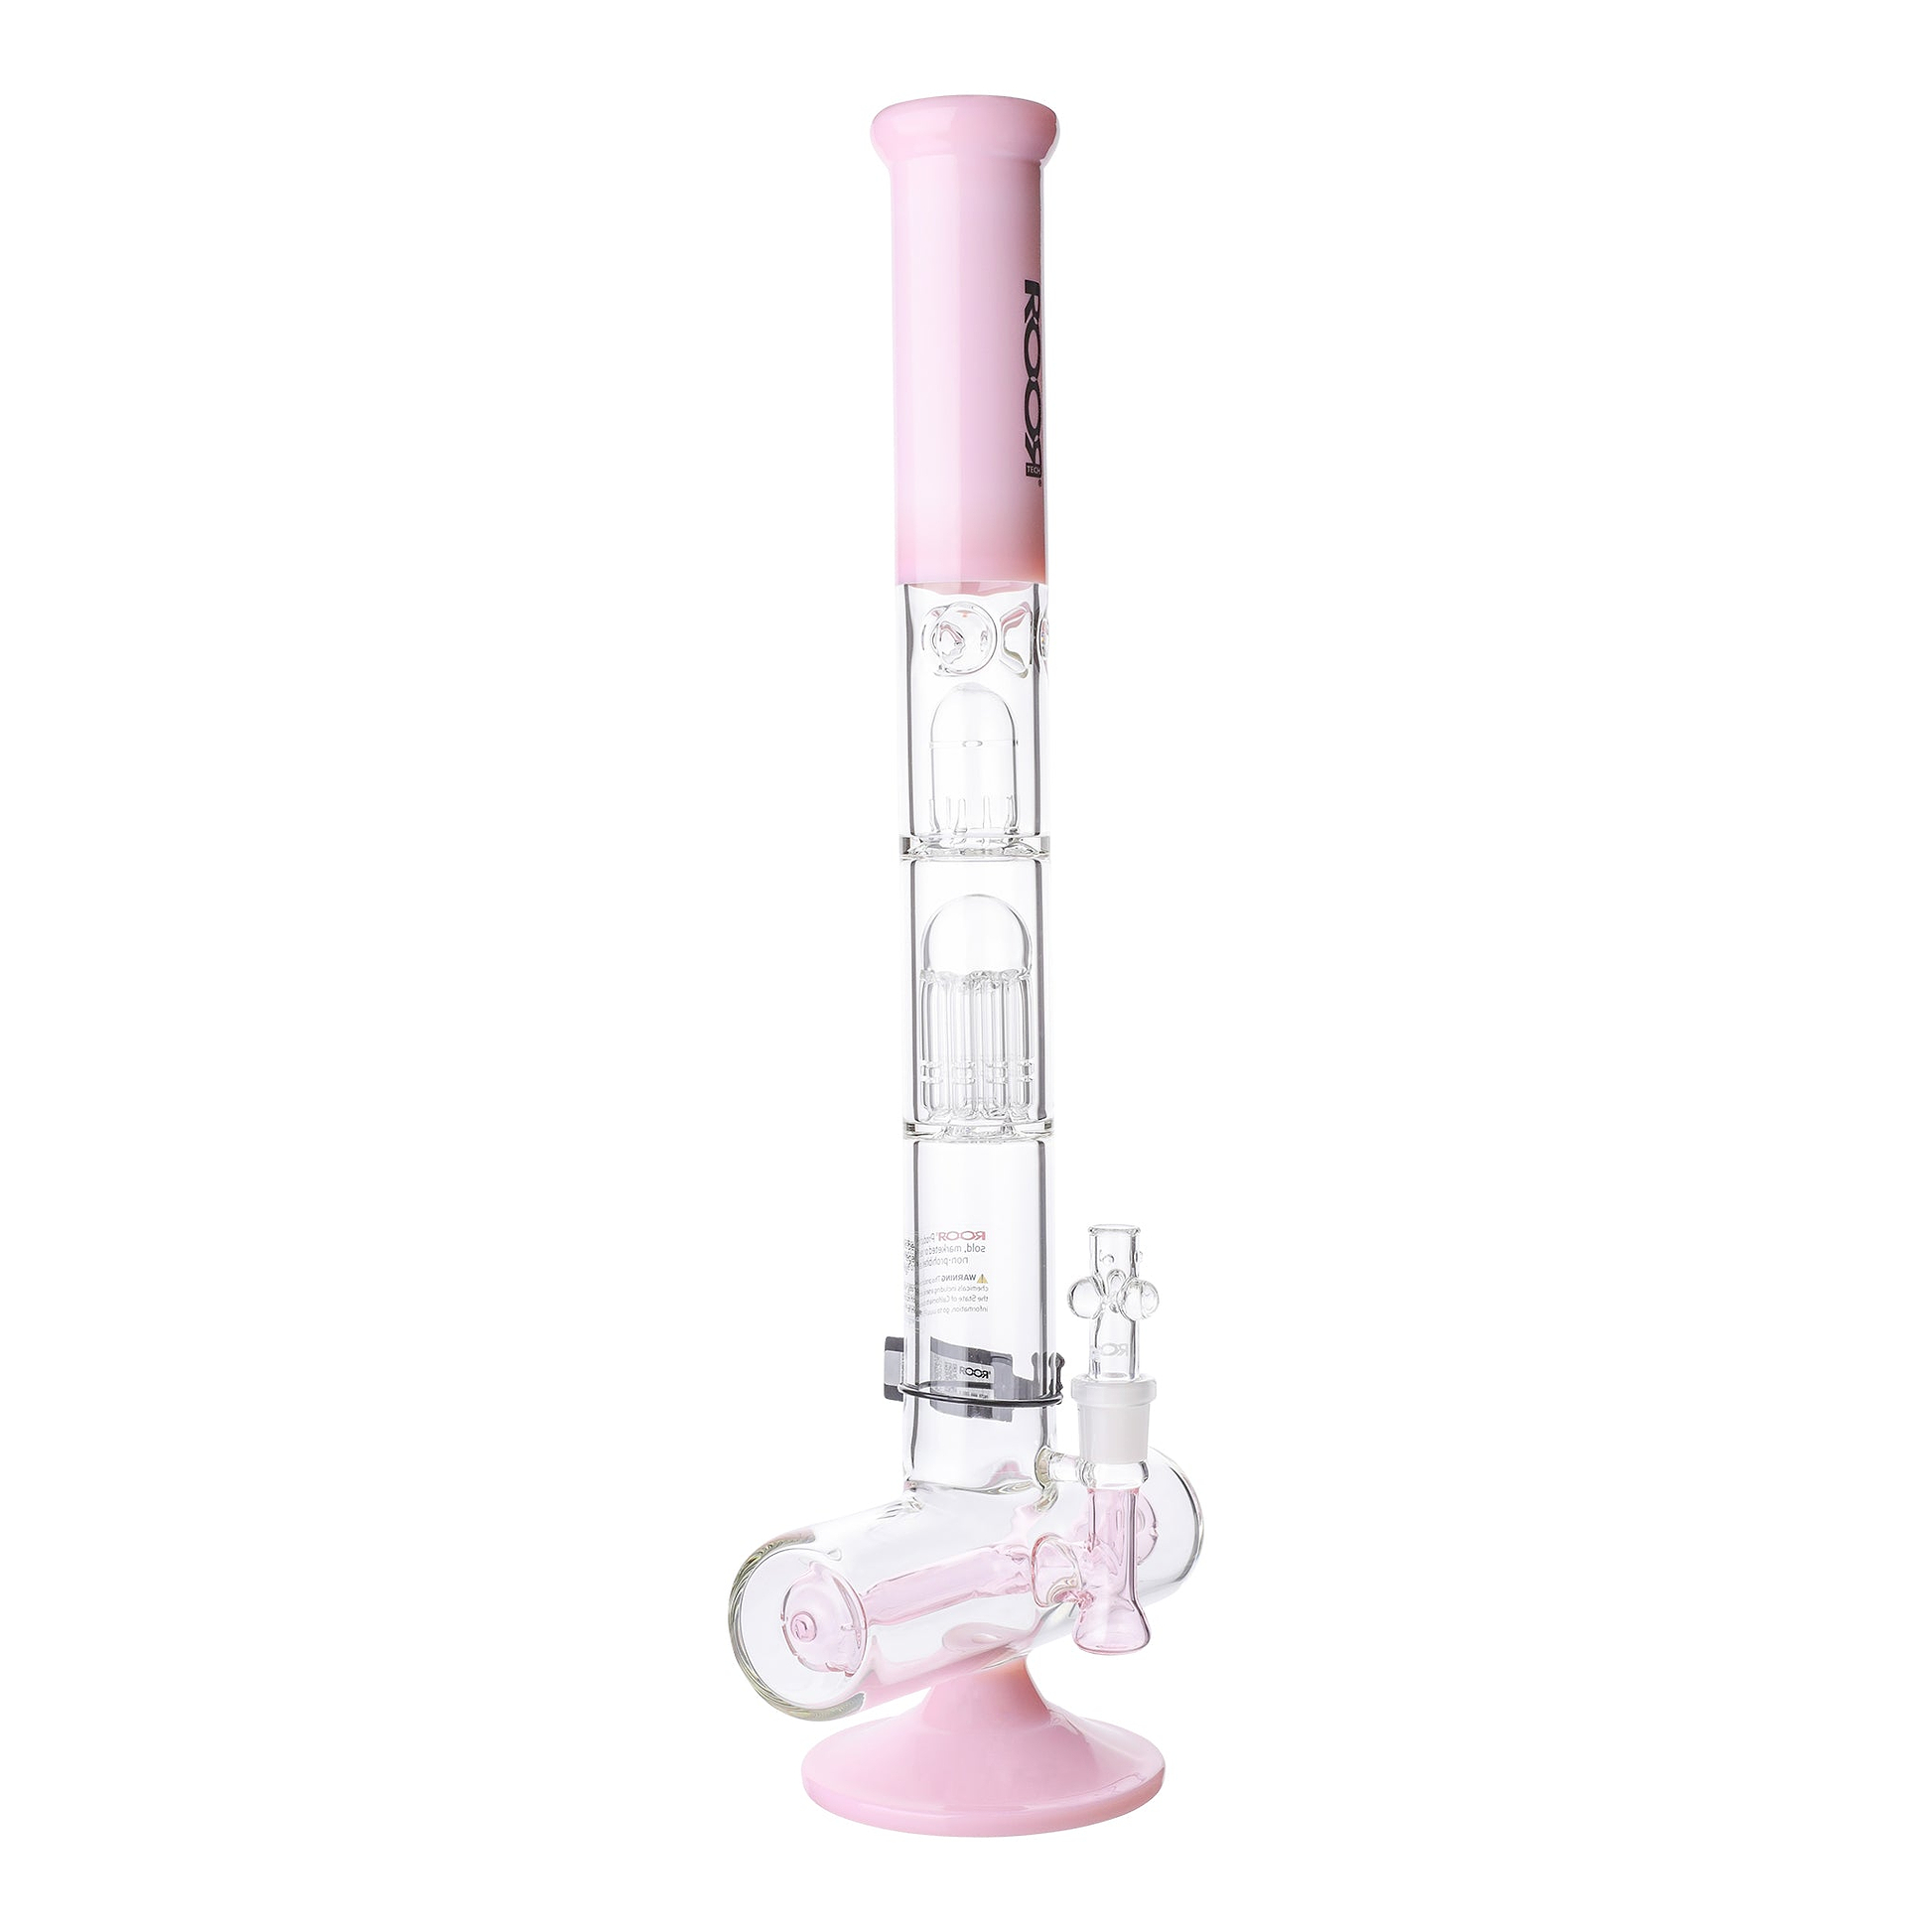 Pink Percolator Bongs from Diamond Glass – Aqua Lab Technologies